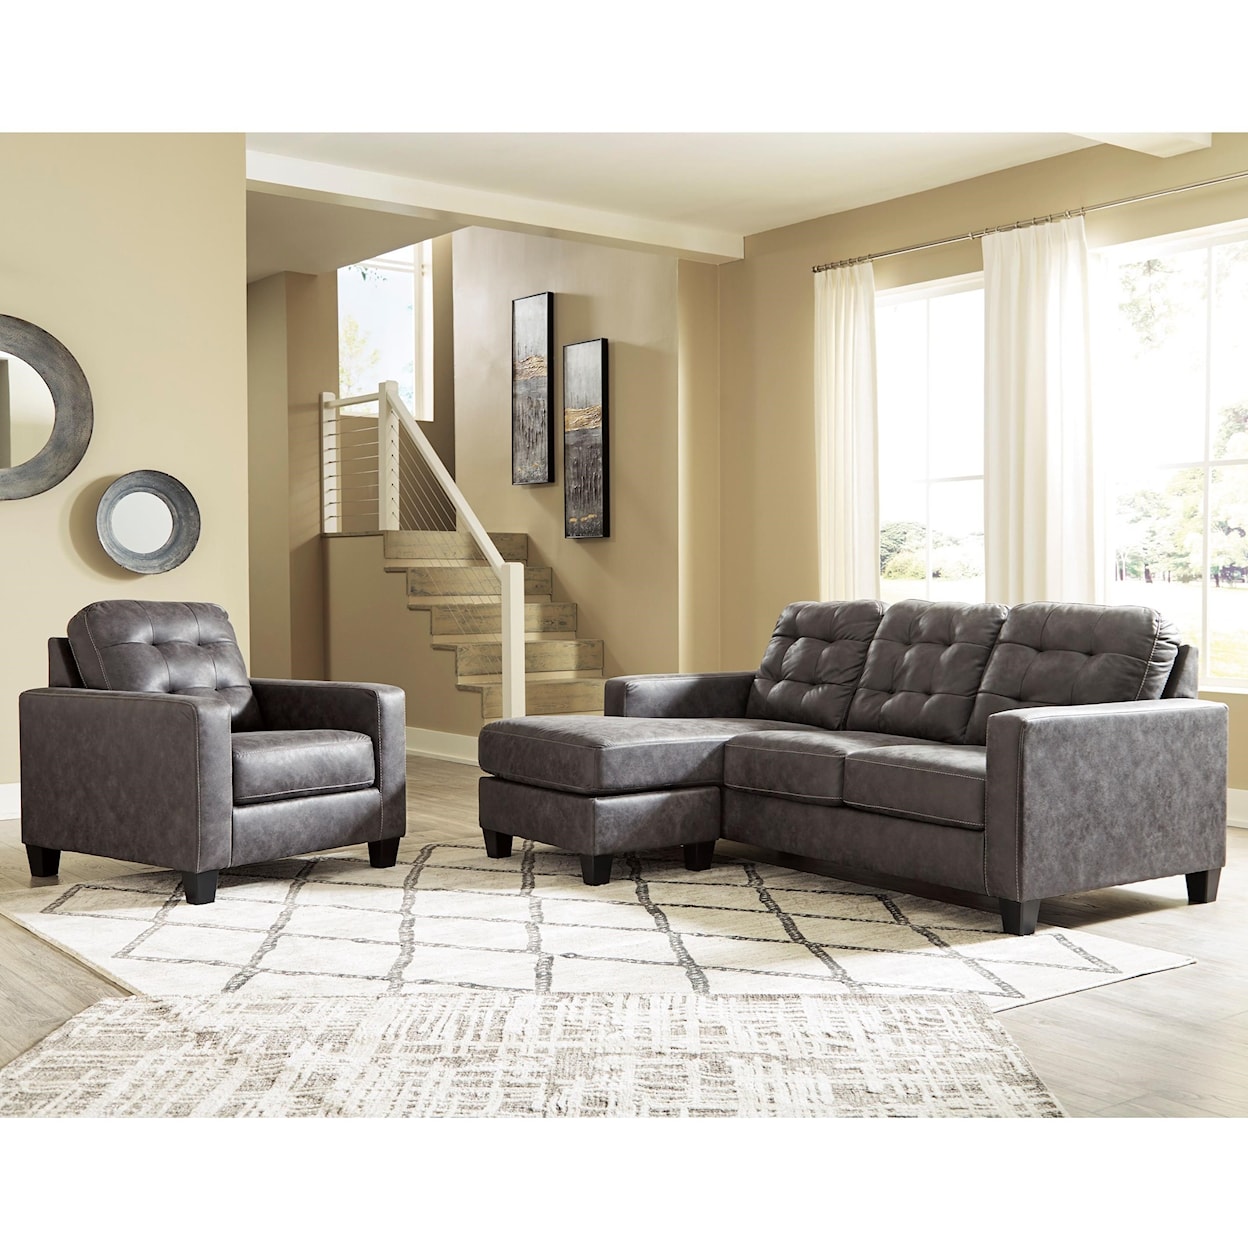 Ashley Furniture Benchcraft Venaldi Stationary Living Room Group